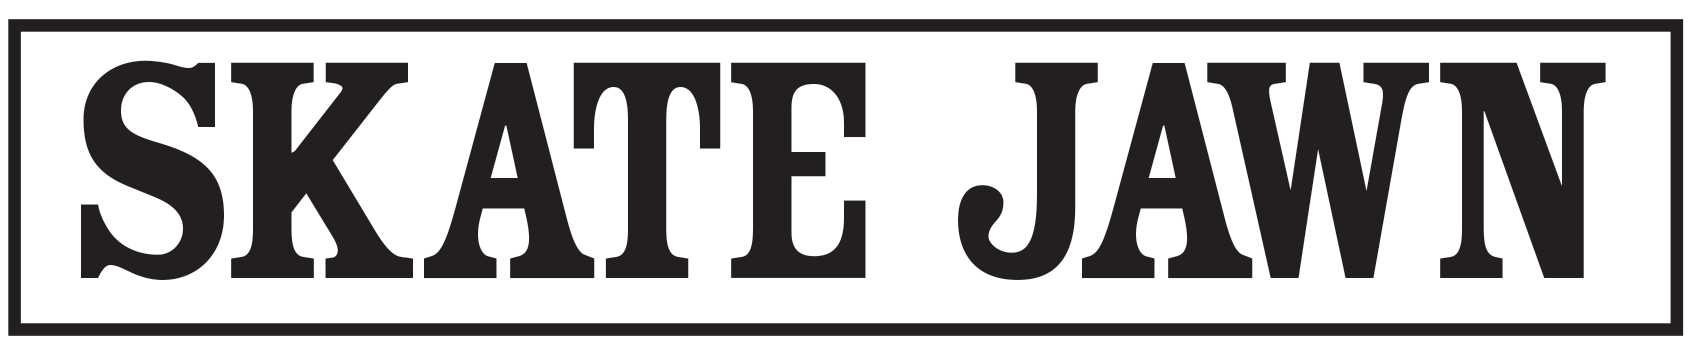 skate-jawn-magazine-logo-header copy.png